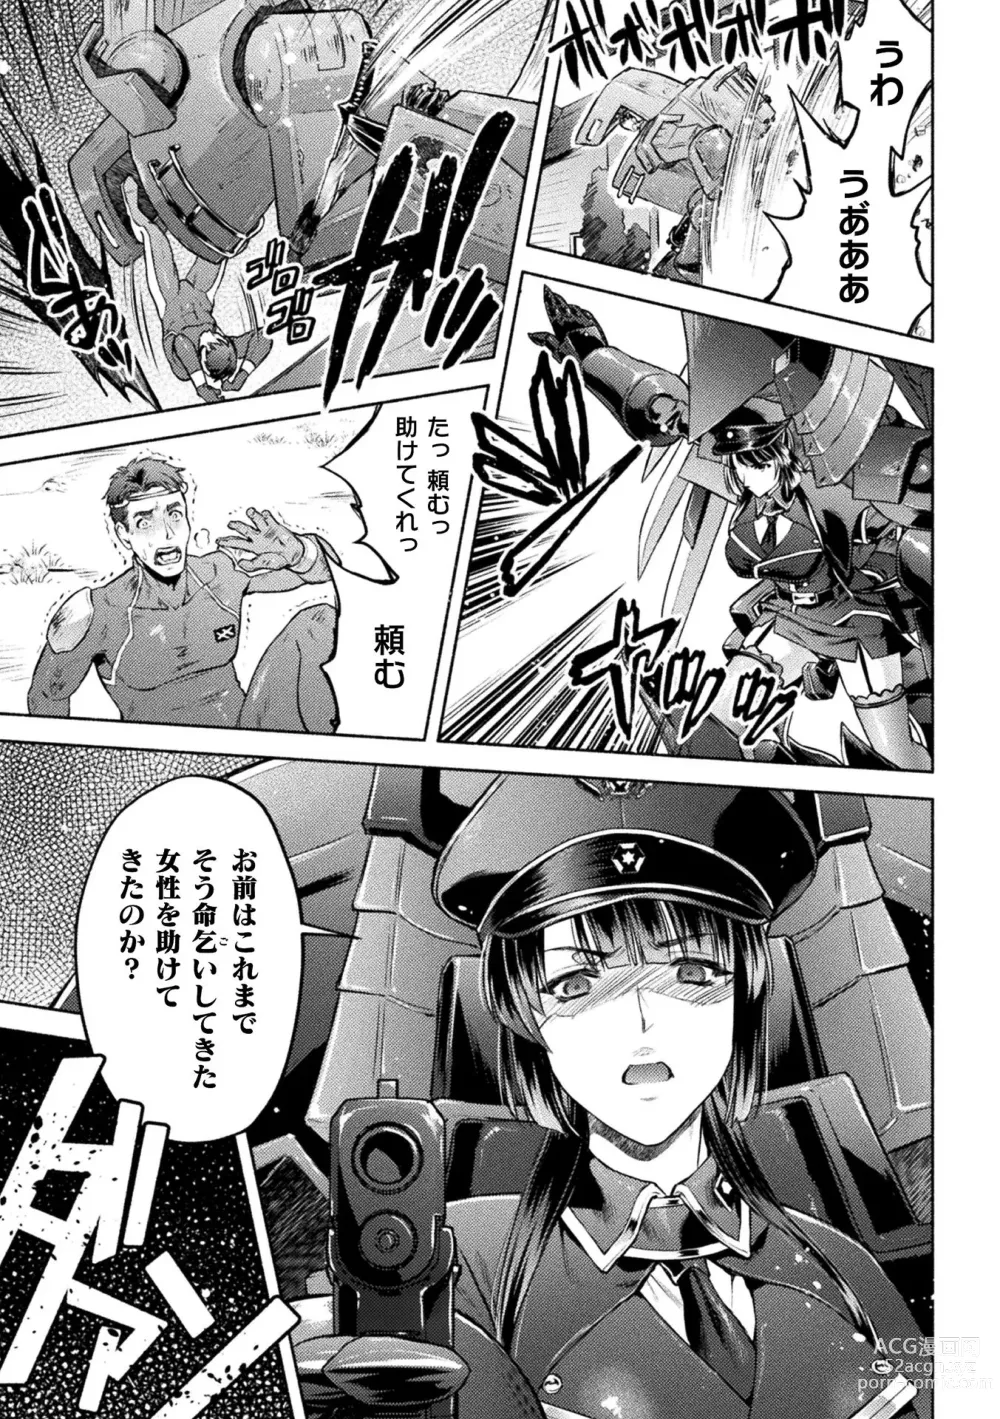 Page 5 of manga Kukkoro Heroines Vol. 34